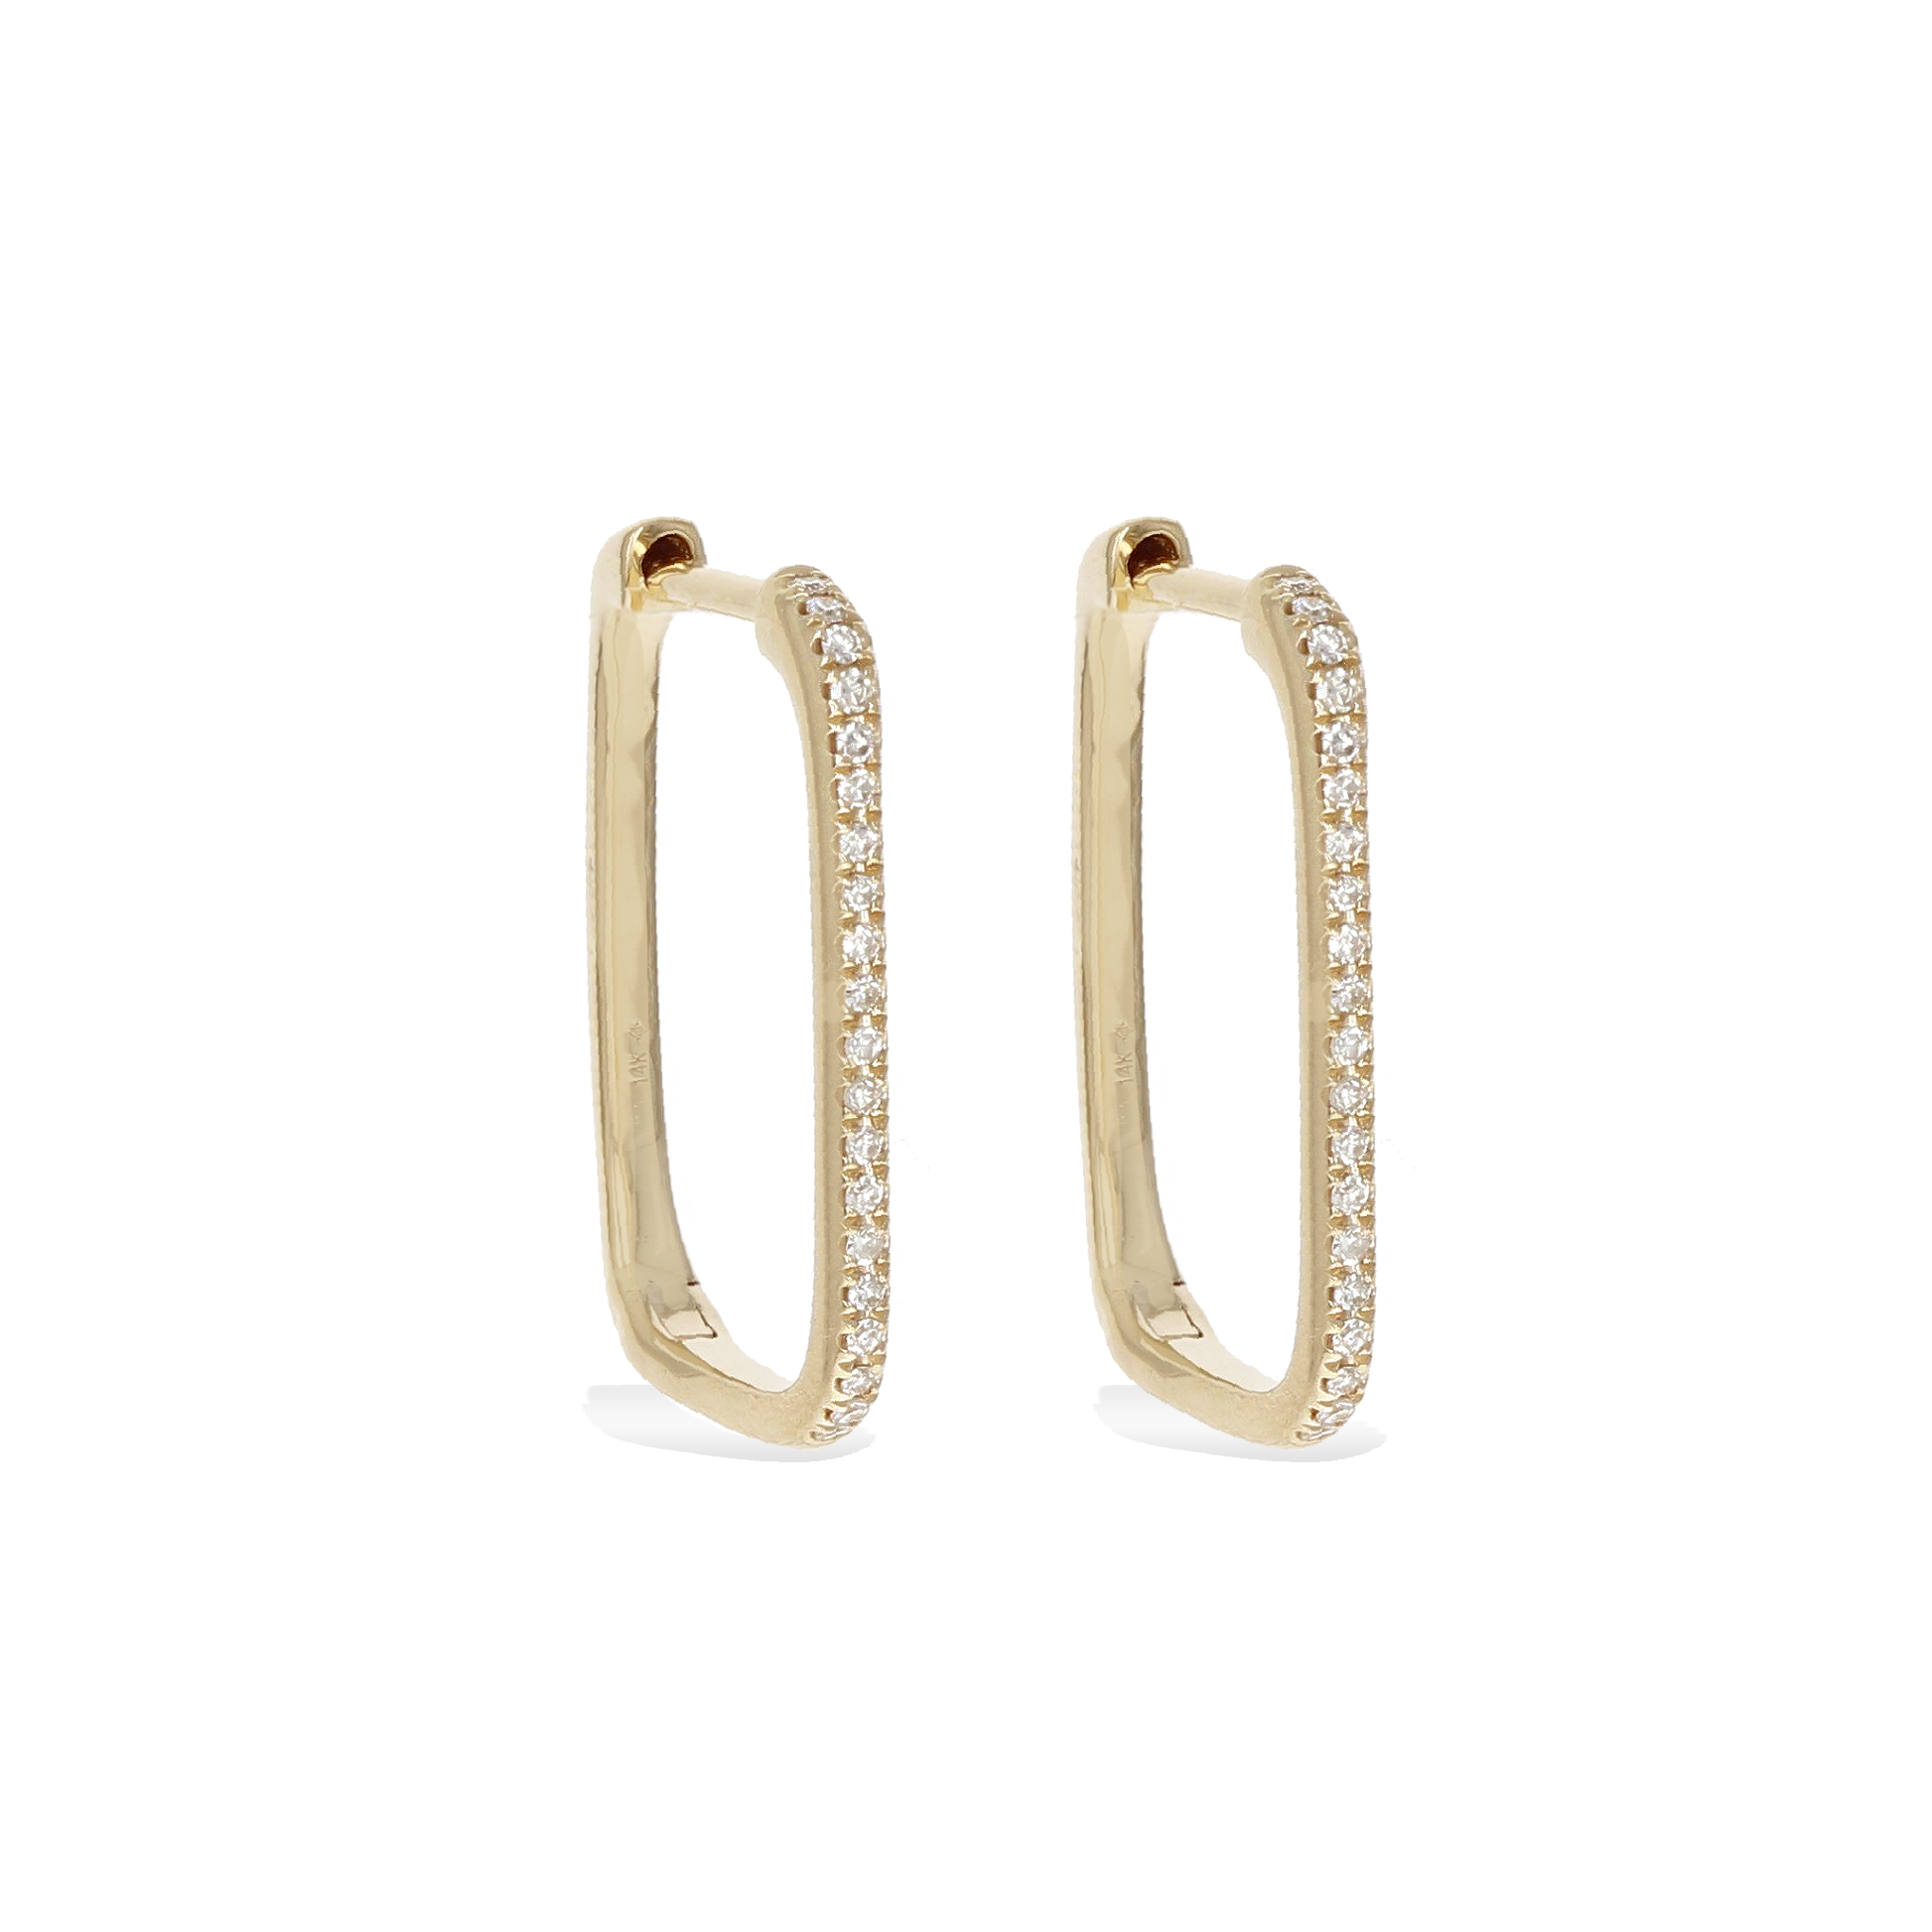 Medium Diamond Rectangle Hoop Earrings in Gold From Alexandra Marks jewelry